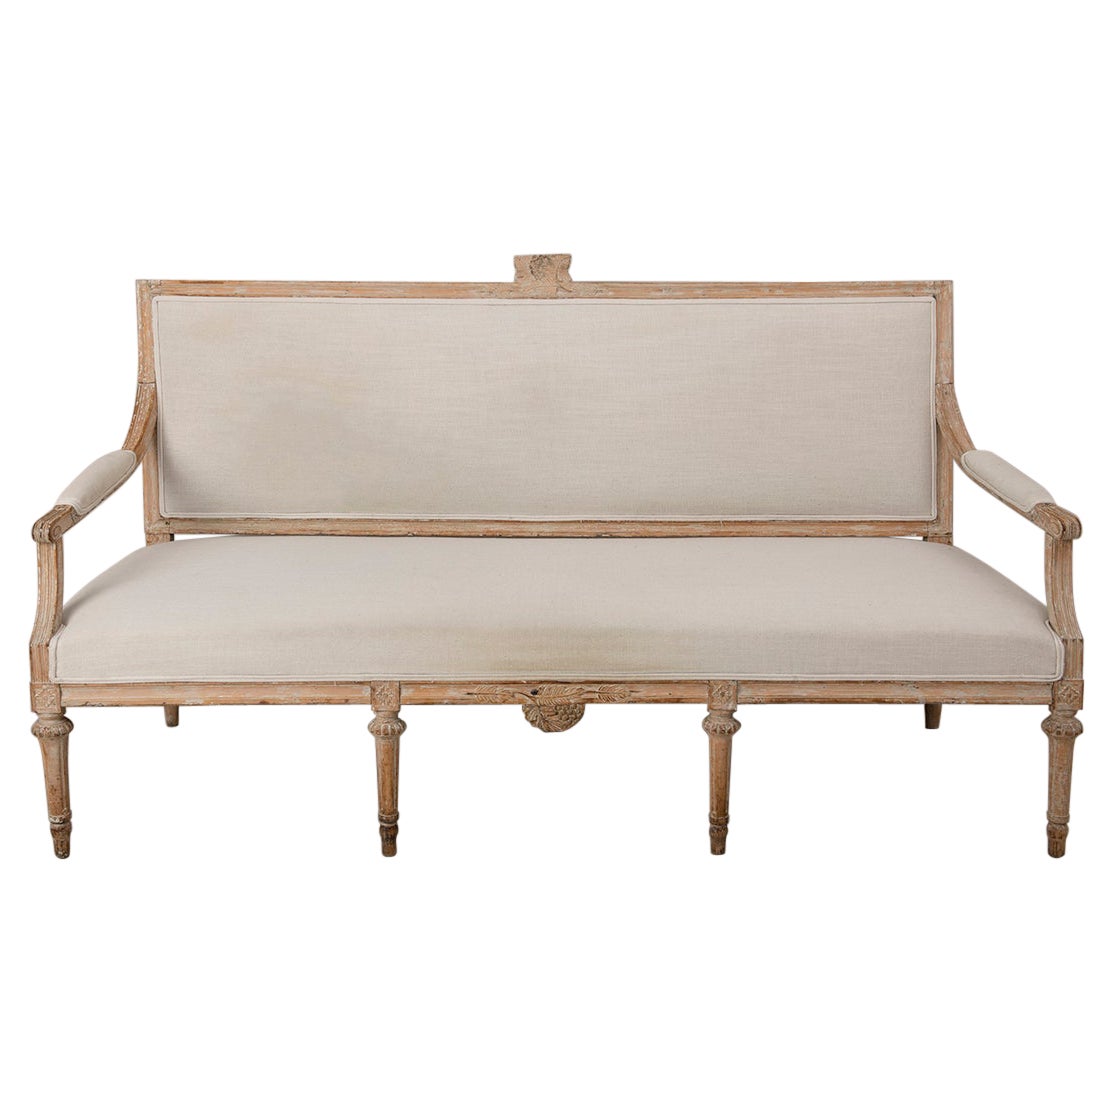 18th c. Swedish Gustavian Period Sofa Bench in Original Patina